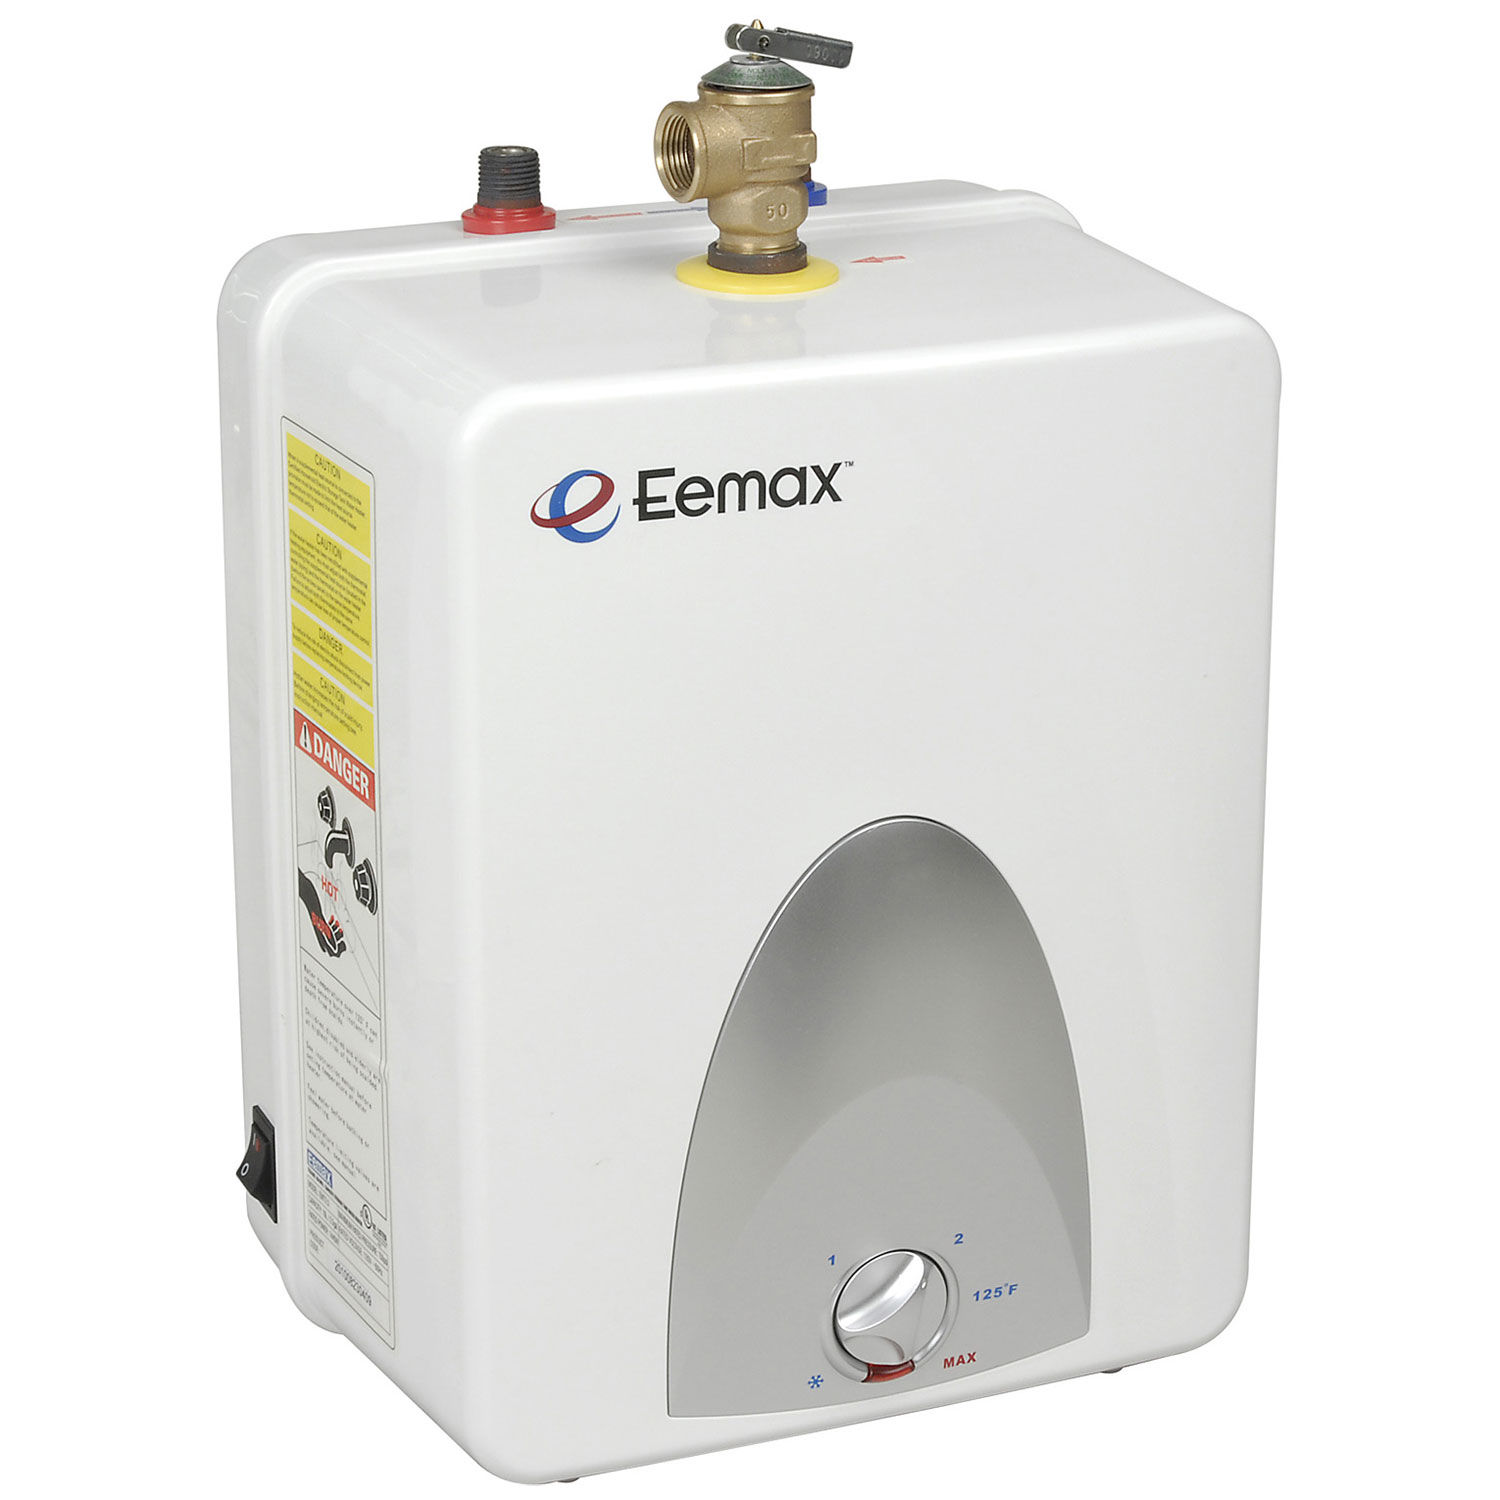 Eemax Electric Mini Tank Water Heater 4.0 gallon 120V, PlugIn, Lot of 1 91654600203 eBay